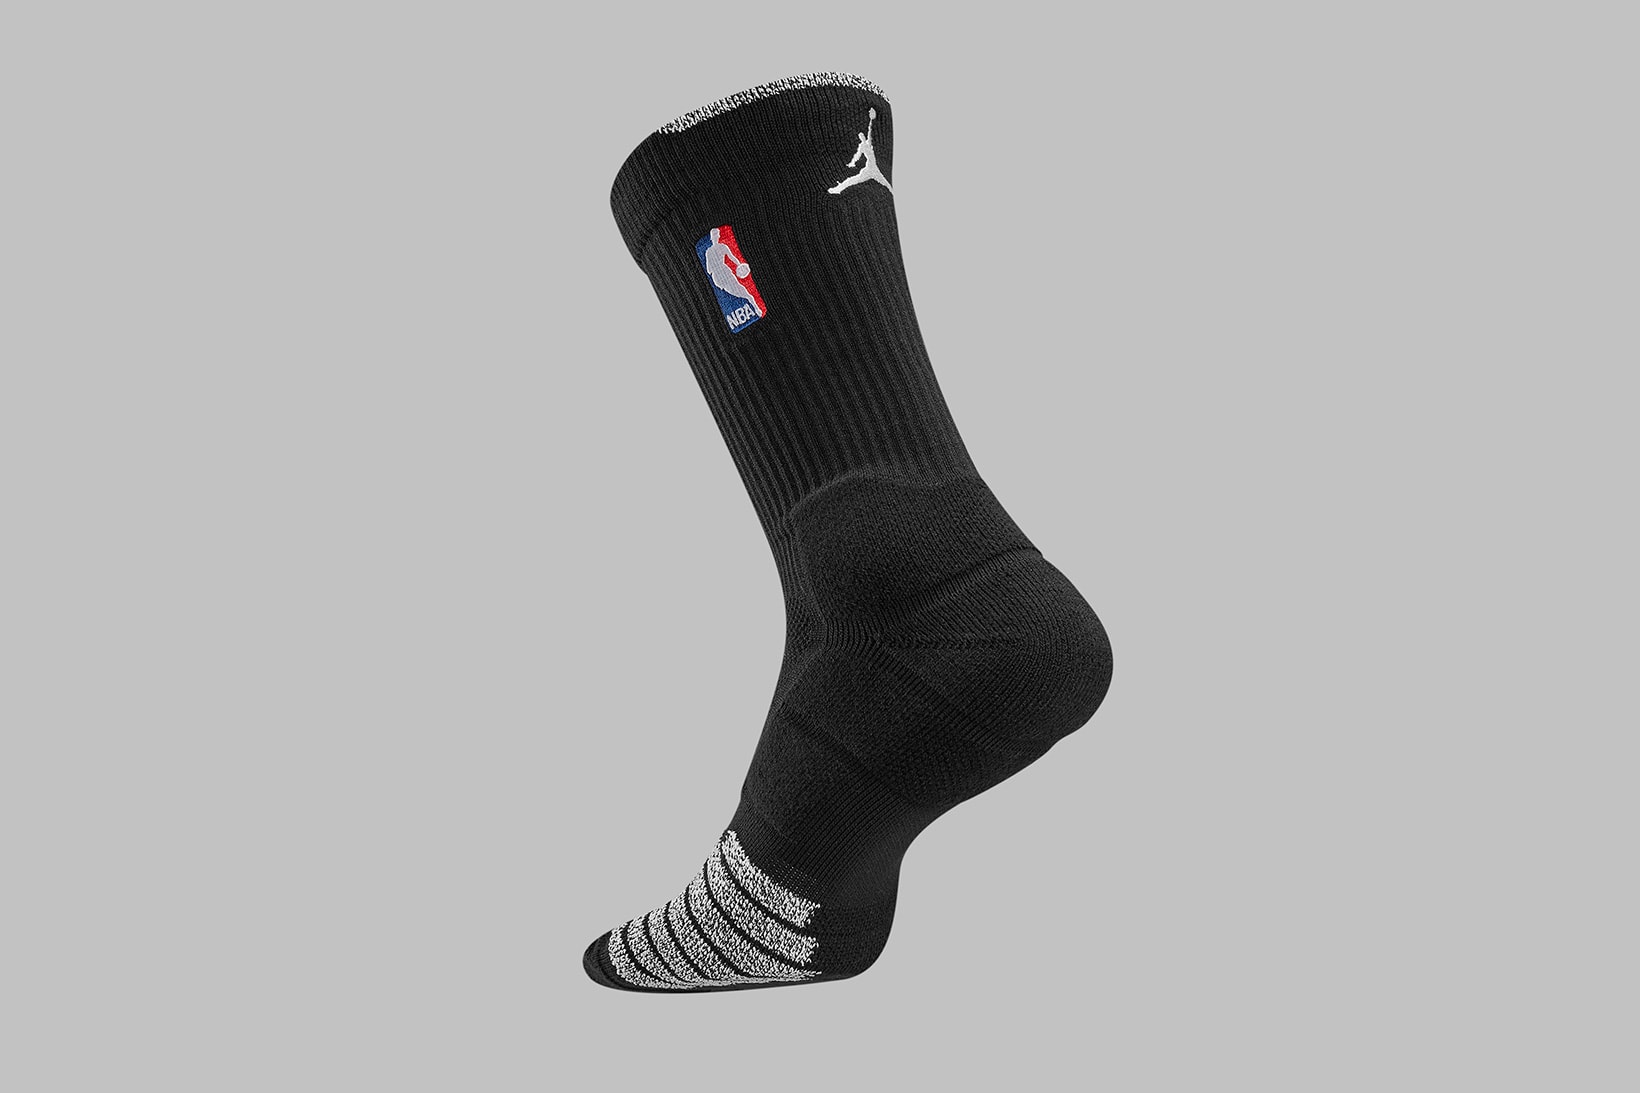 Nike NBA Elite Quick Socks - All Colors - Mid vs Full Length